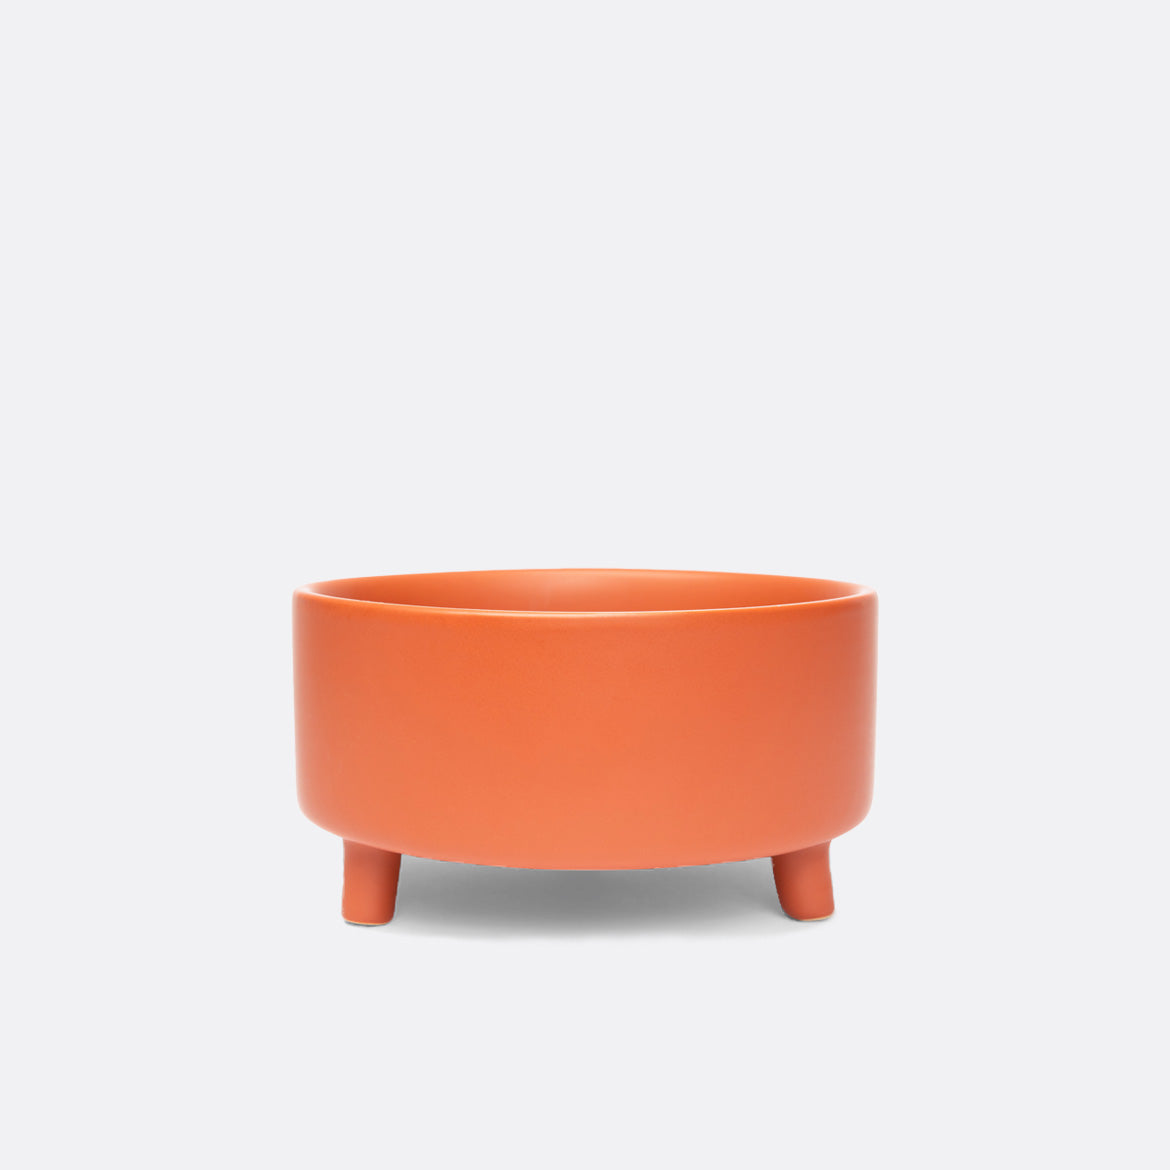 Uplift Bowl Ceramic Dog Bowl by Waggo